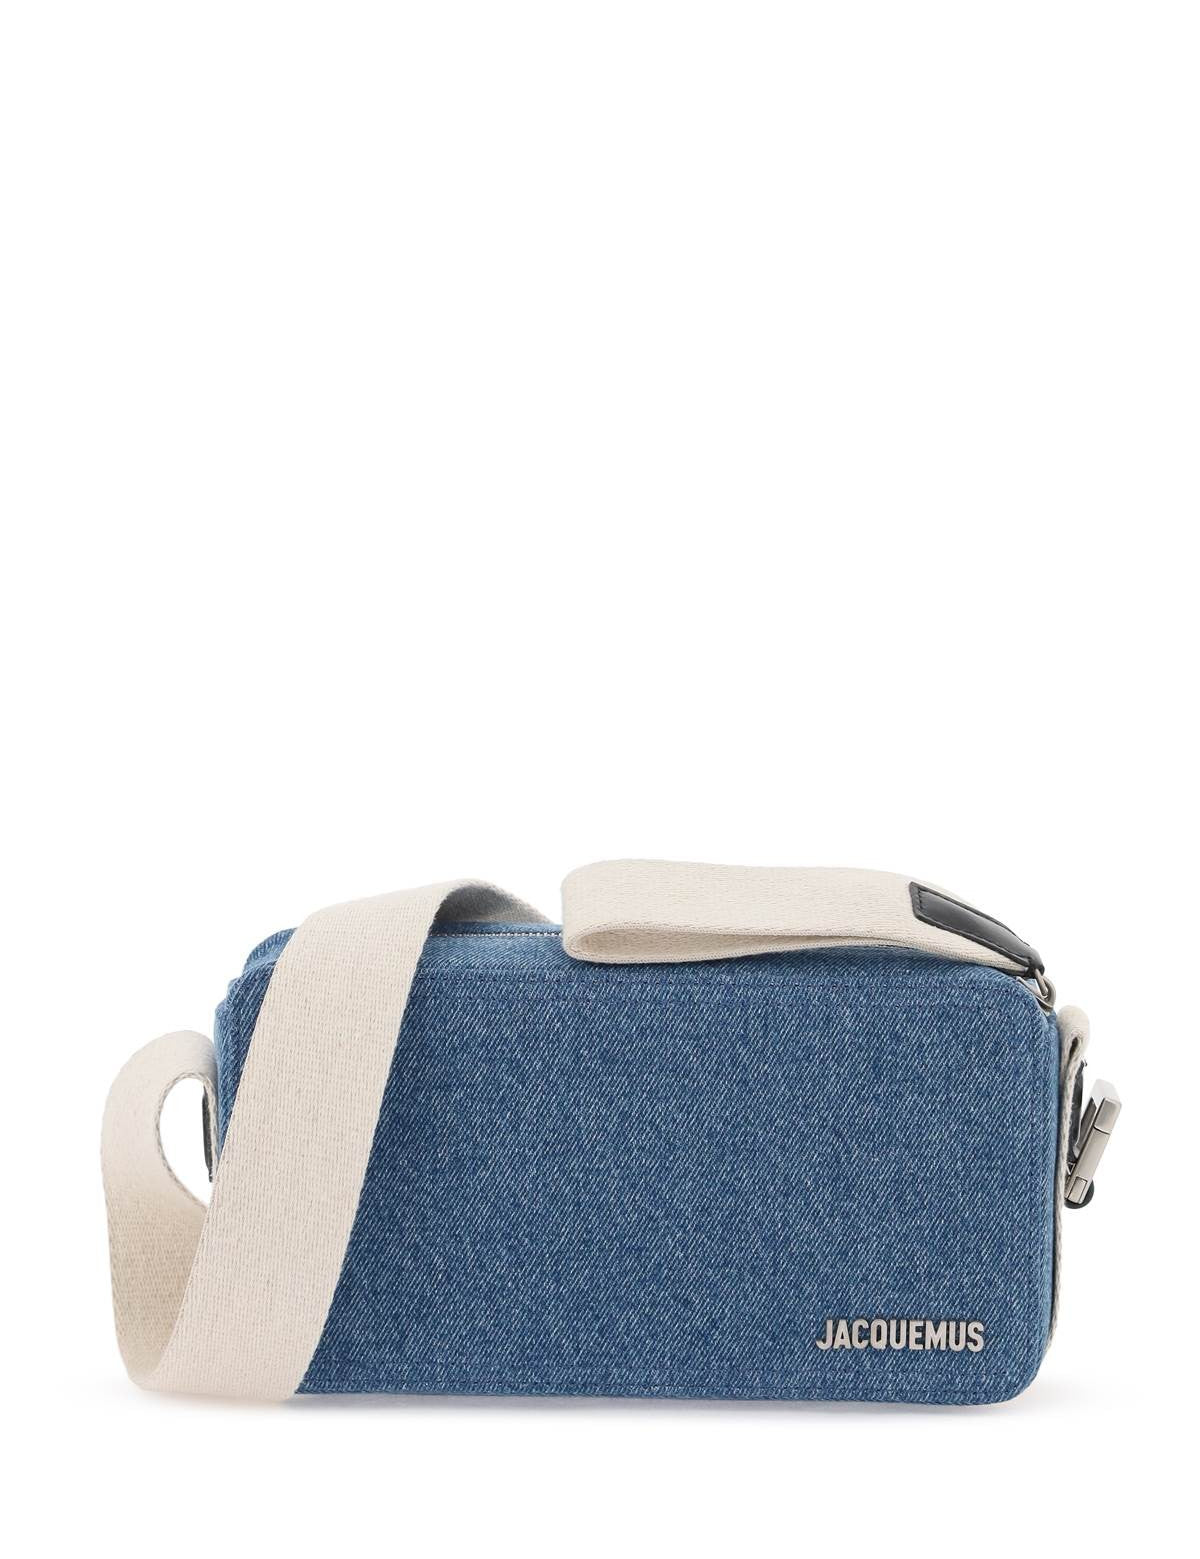 jacquemus-le-cuerda-horizontal-crossbody-bag.jpg